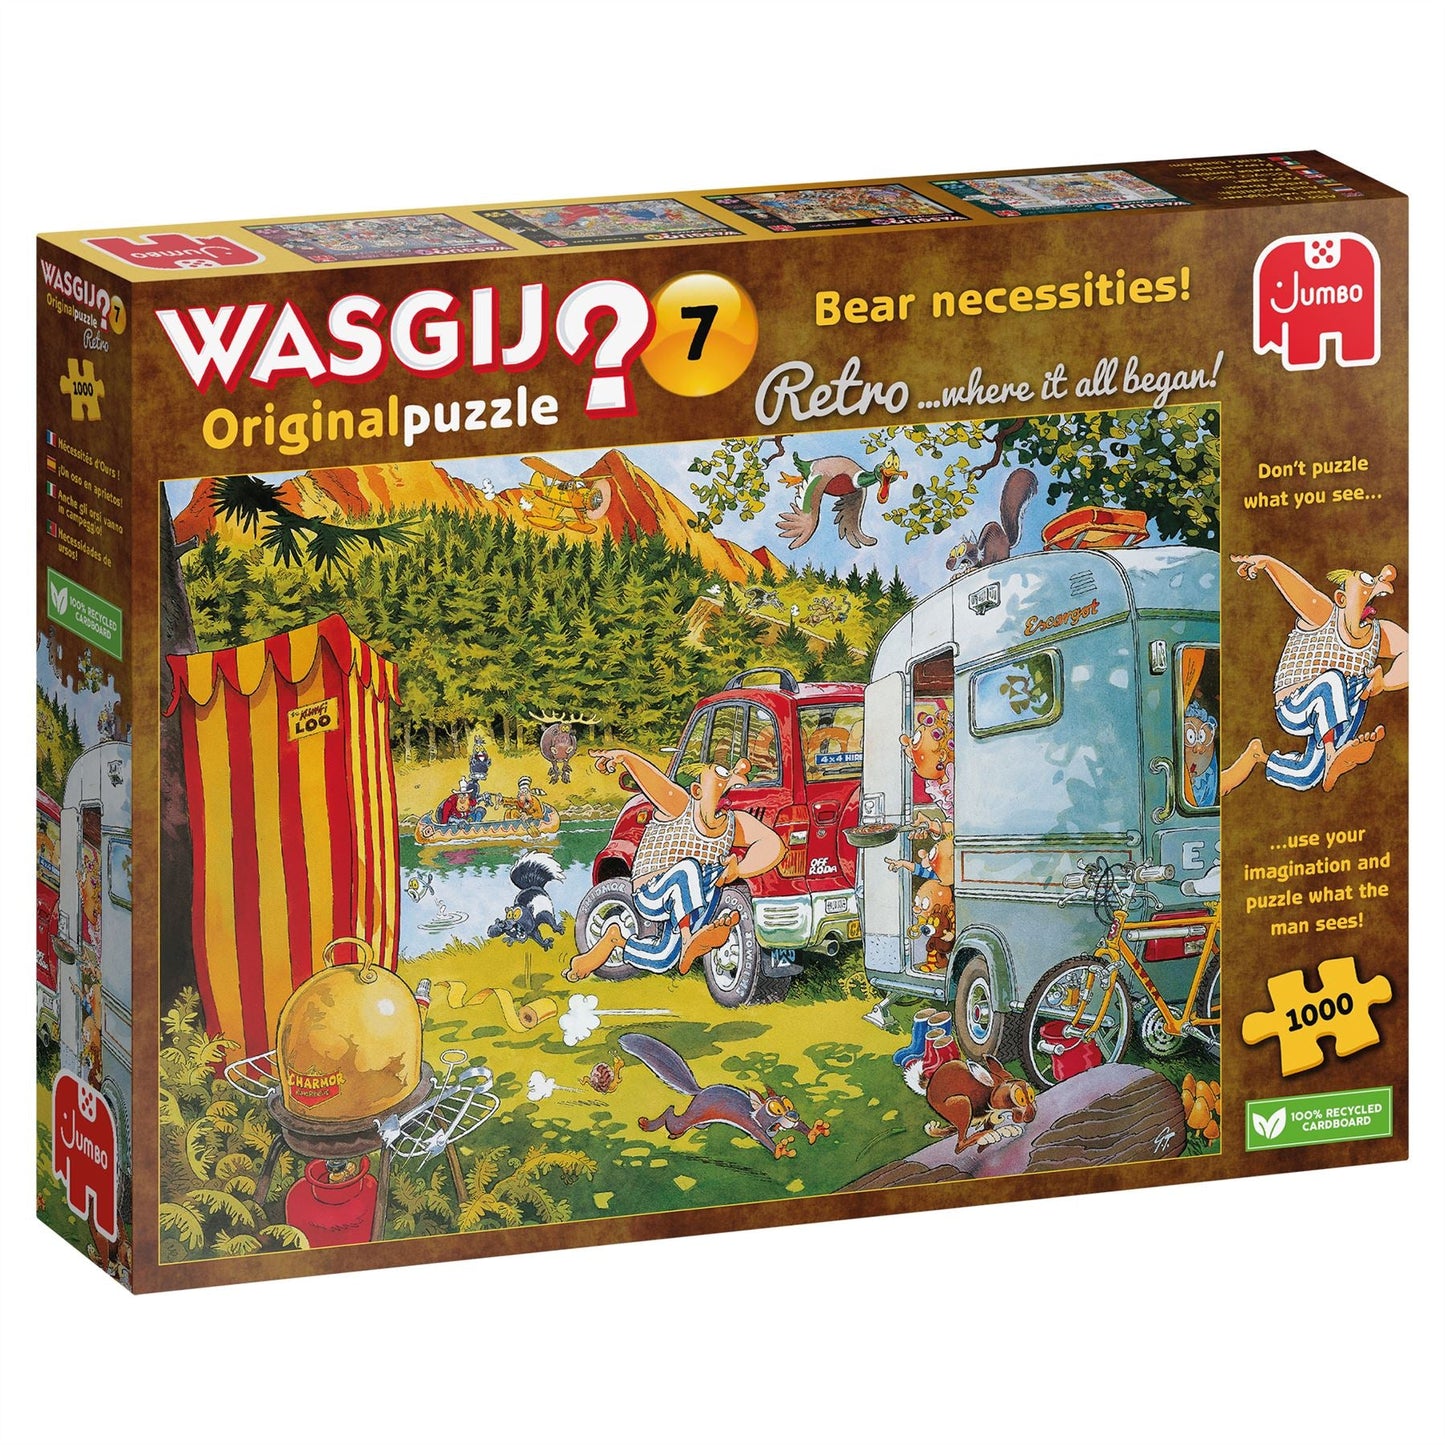 Wasgij Retro Original 7 Bear Necessities! 1000 Piece Jigsaw Puzzle